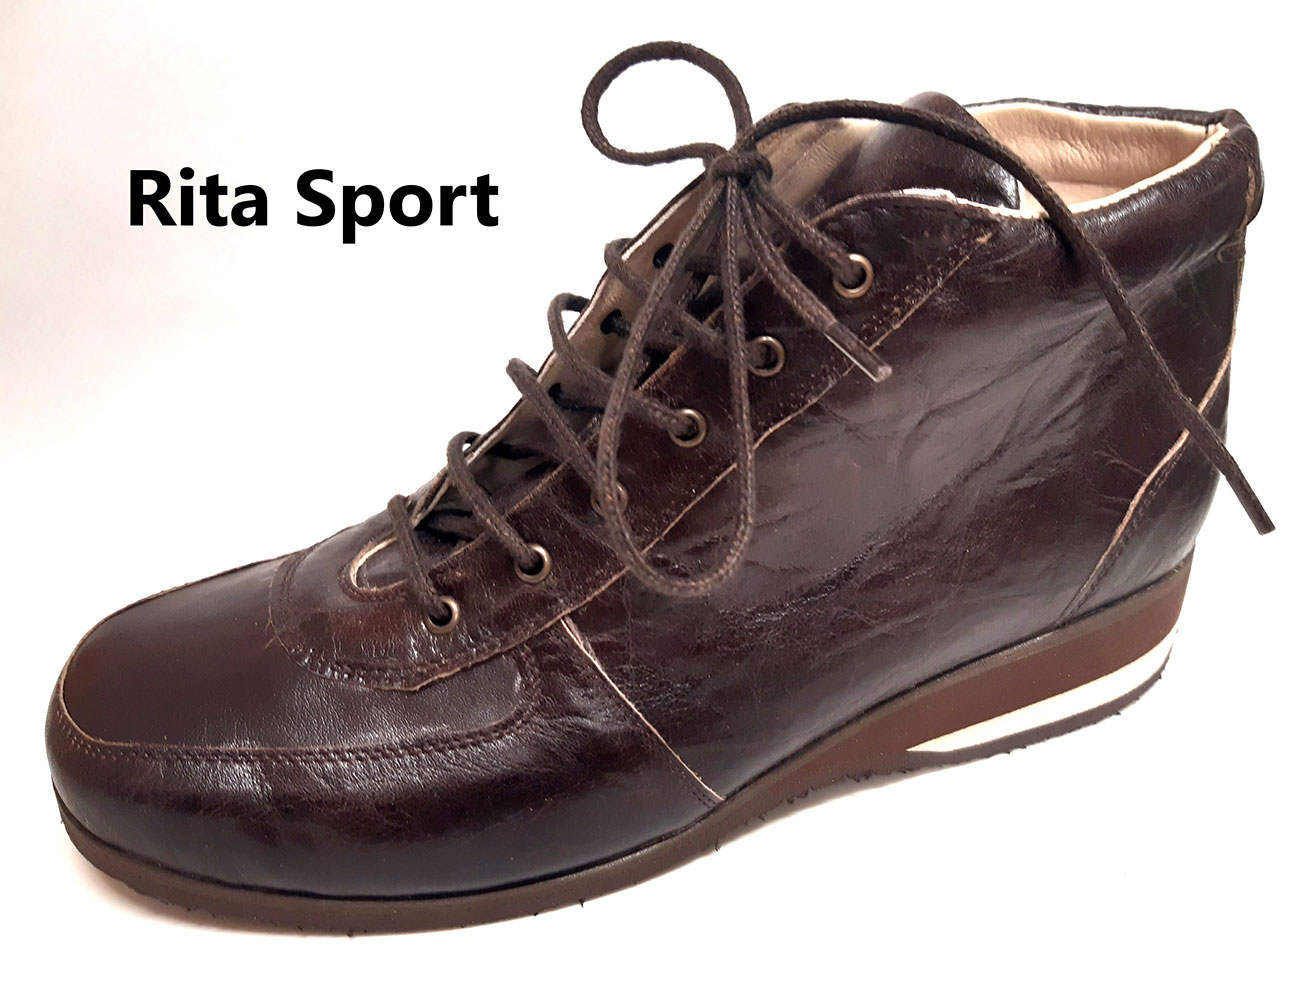 Rita-sport_r.jpg